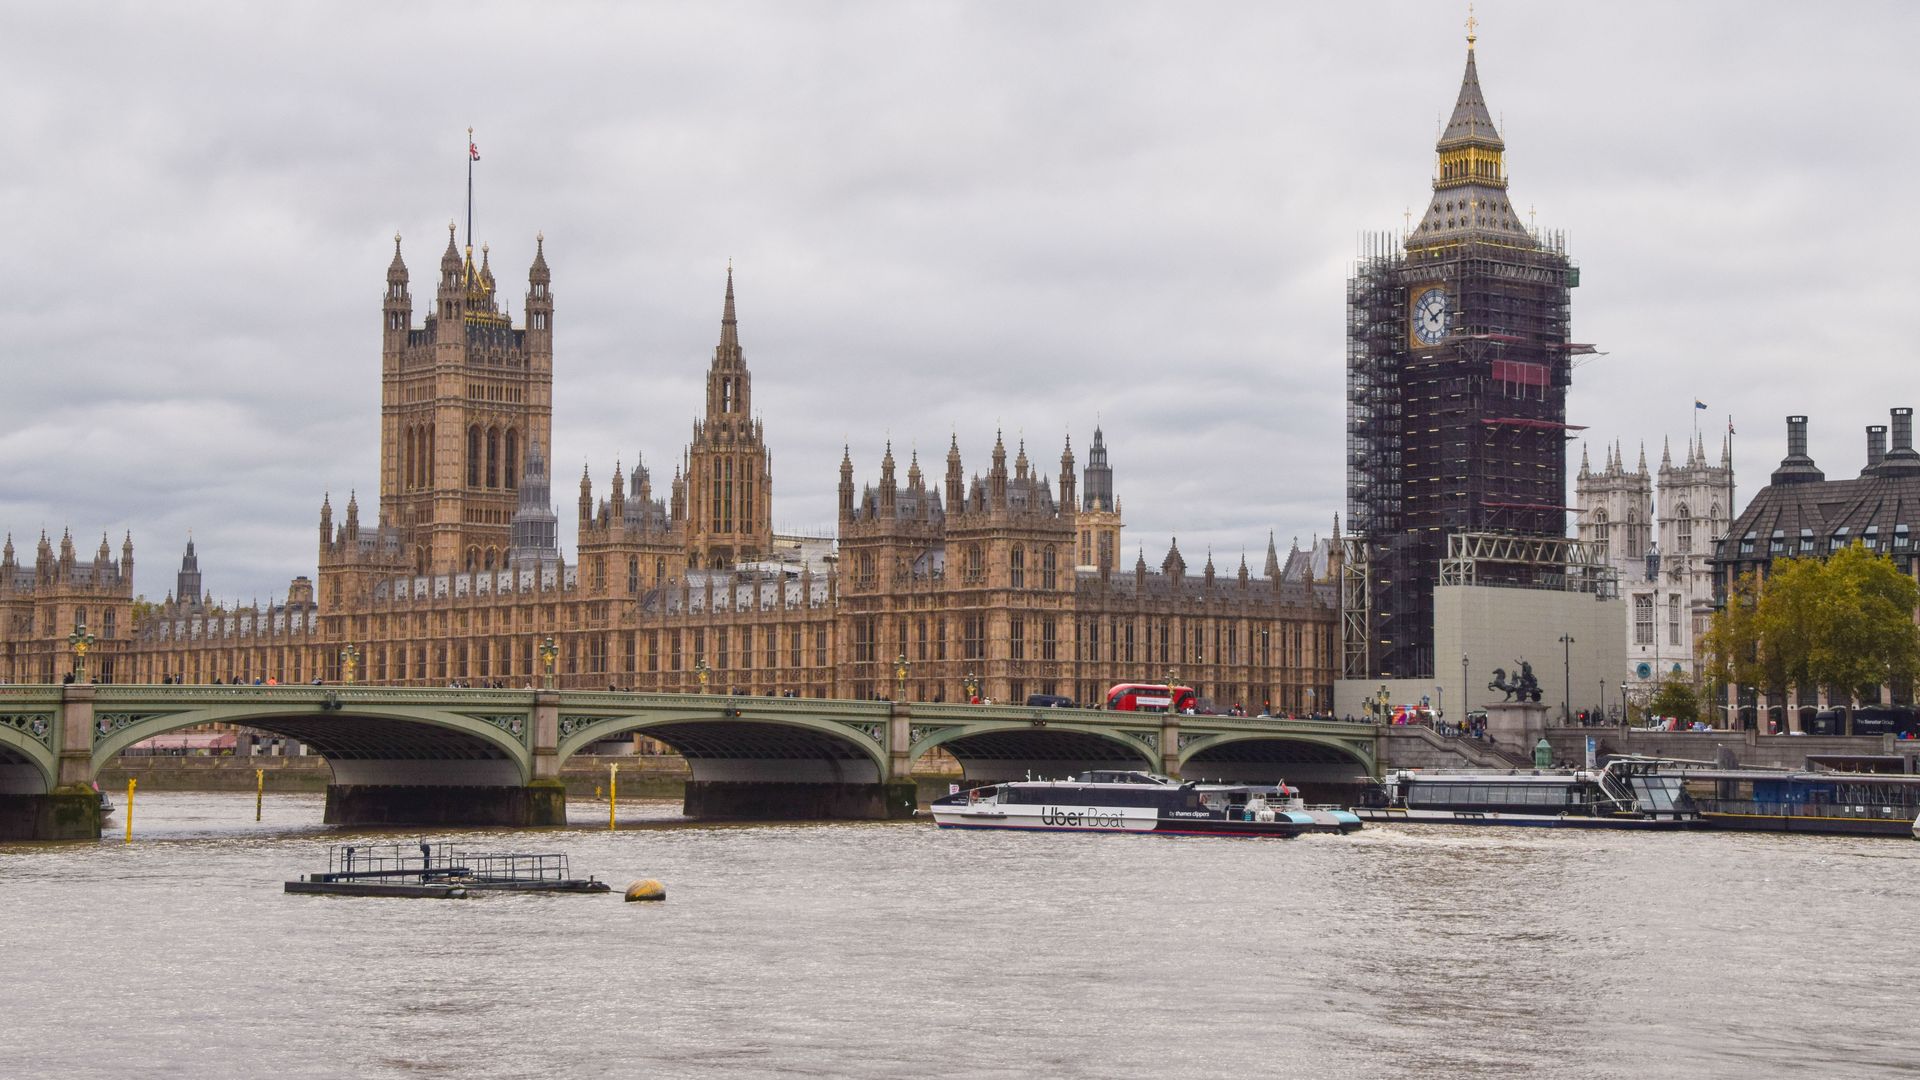  Houses of Parliament, Big Ben and Westminster Bridge. Photo: Vuk Valcic/SOPA Images/LightRocket via Getty Images